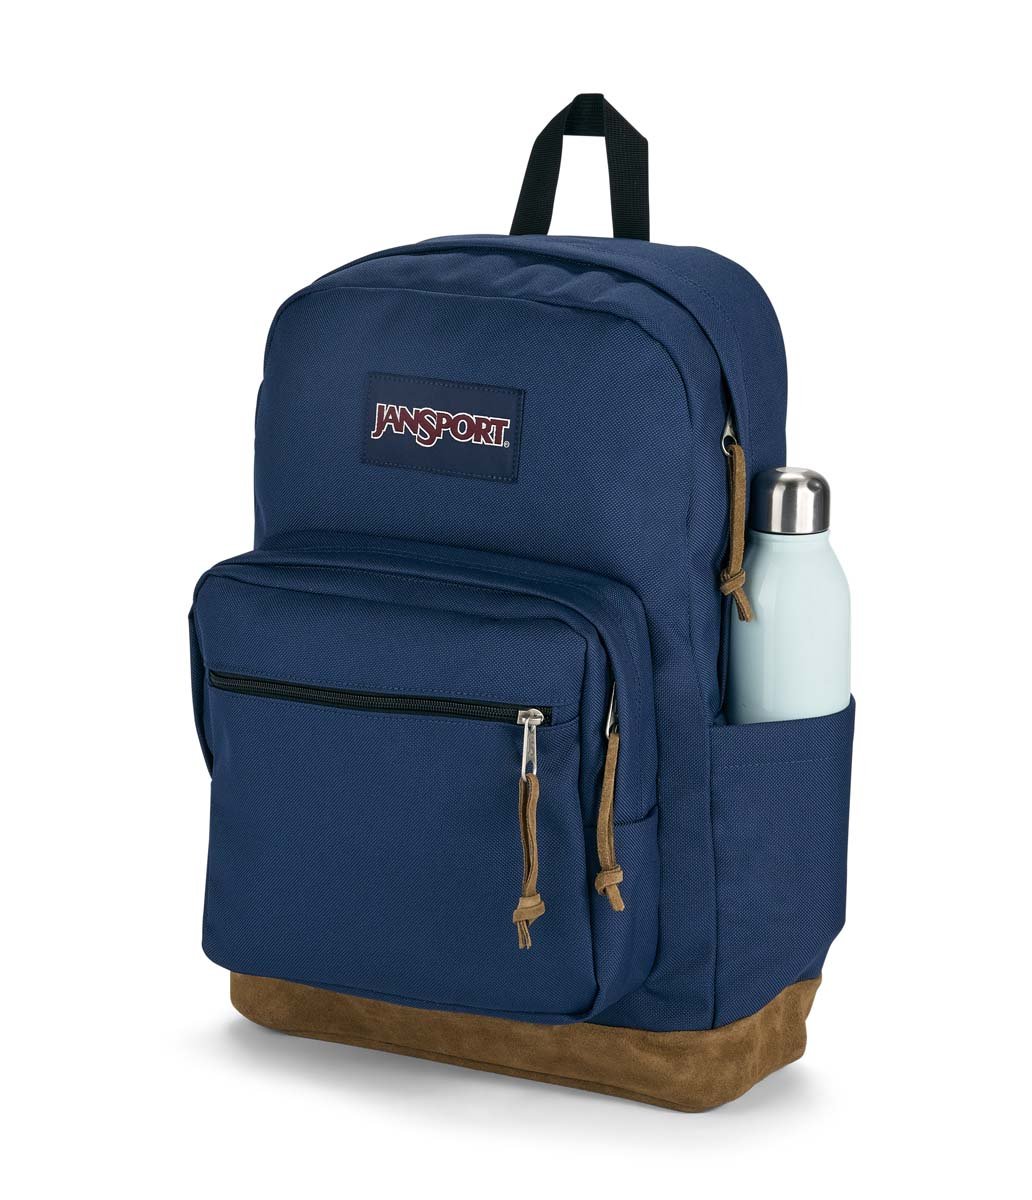 JanSport Right Pack Backpack - Navy